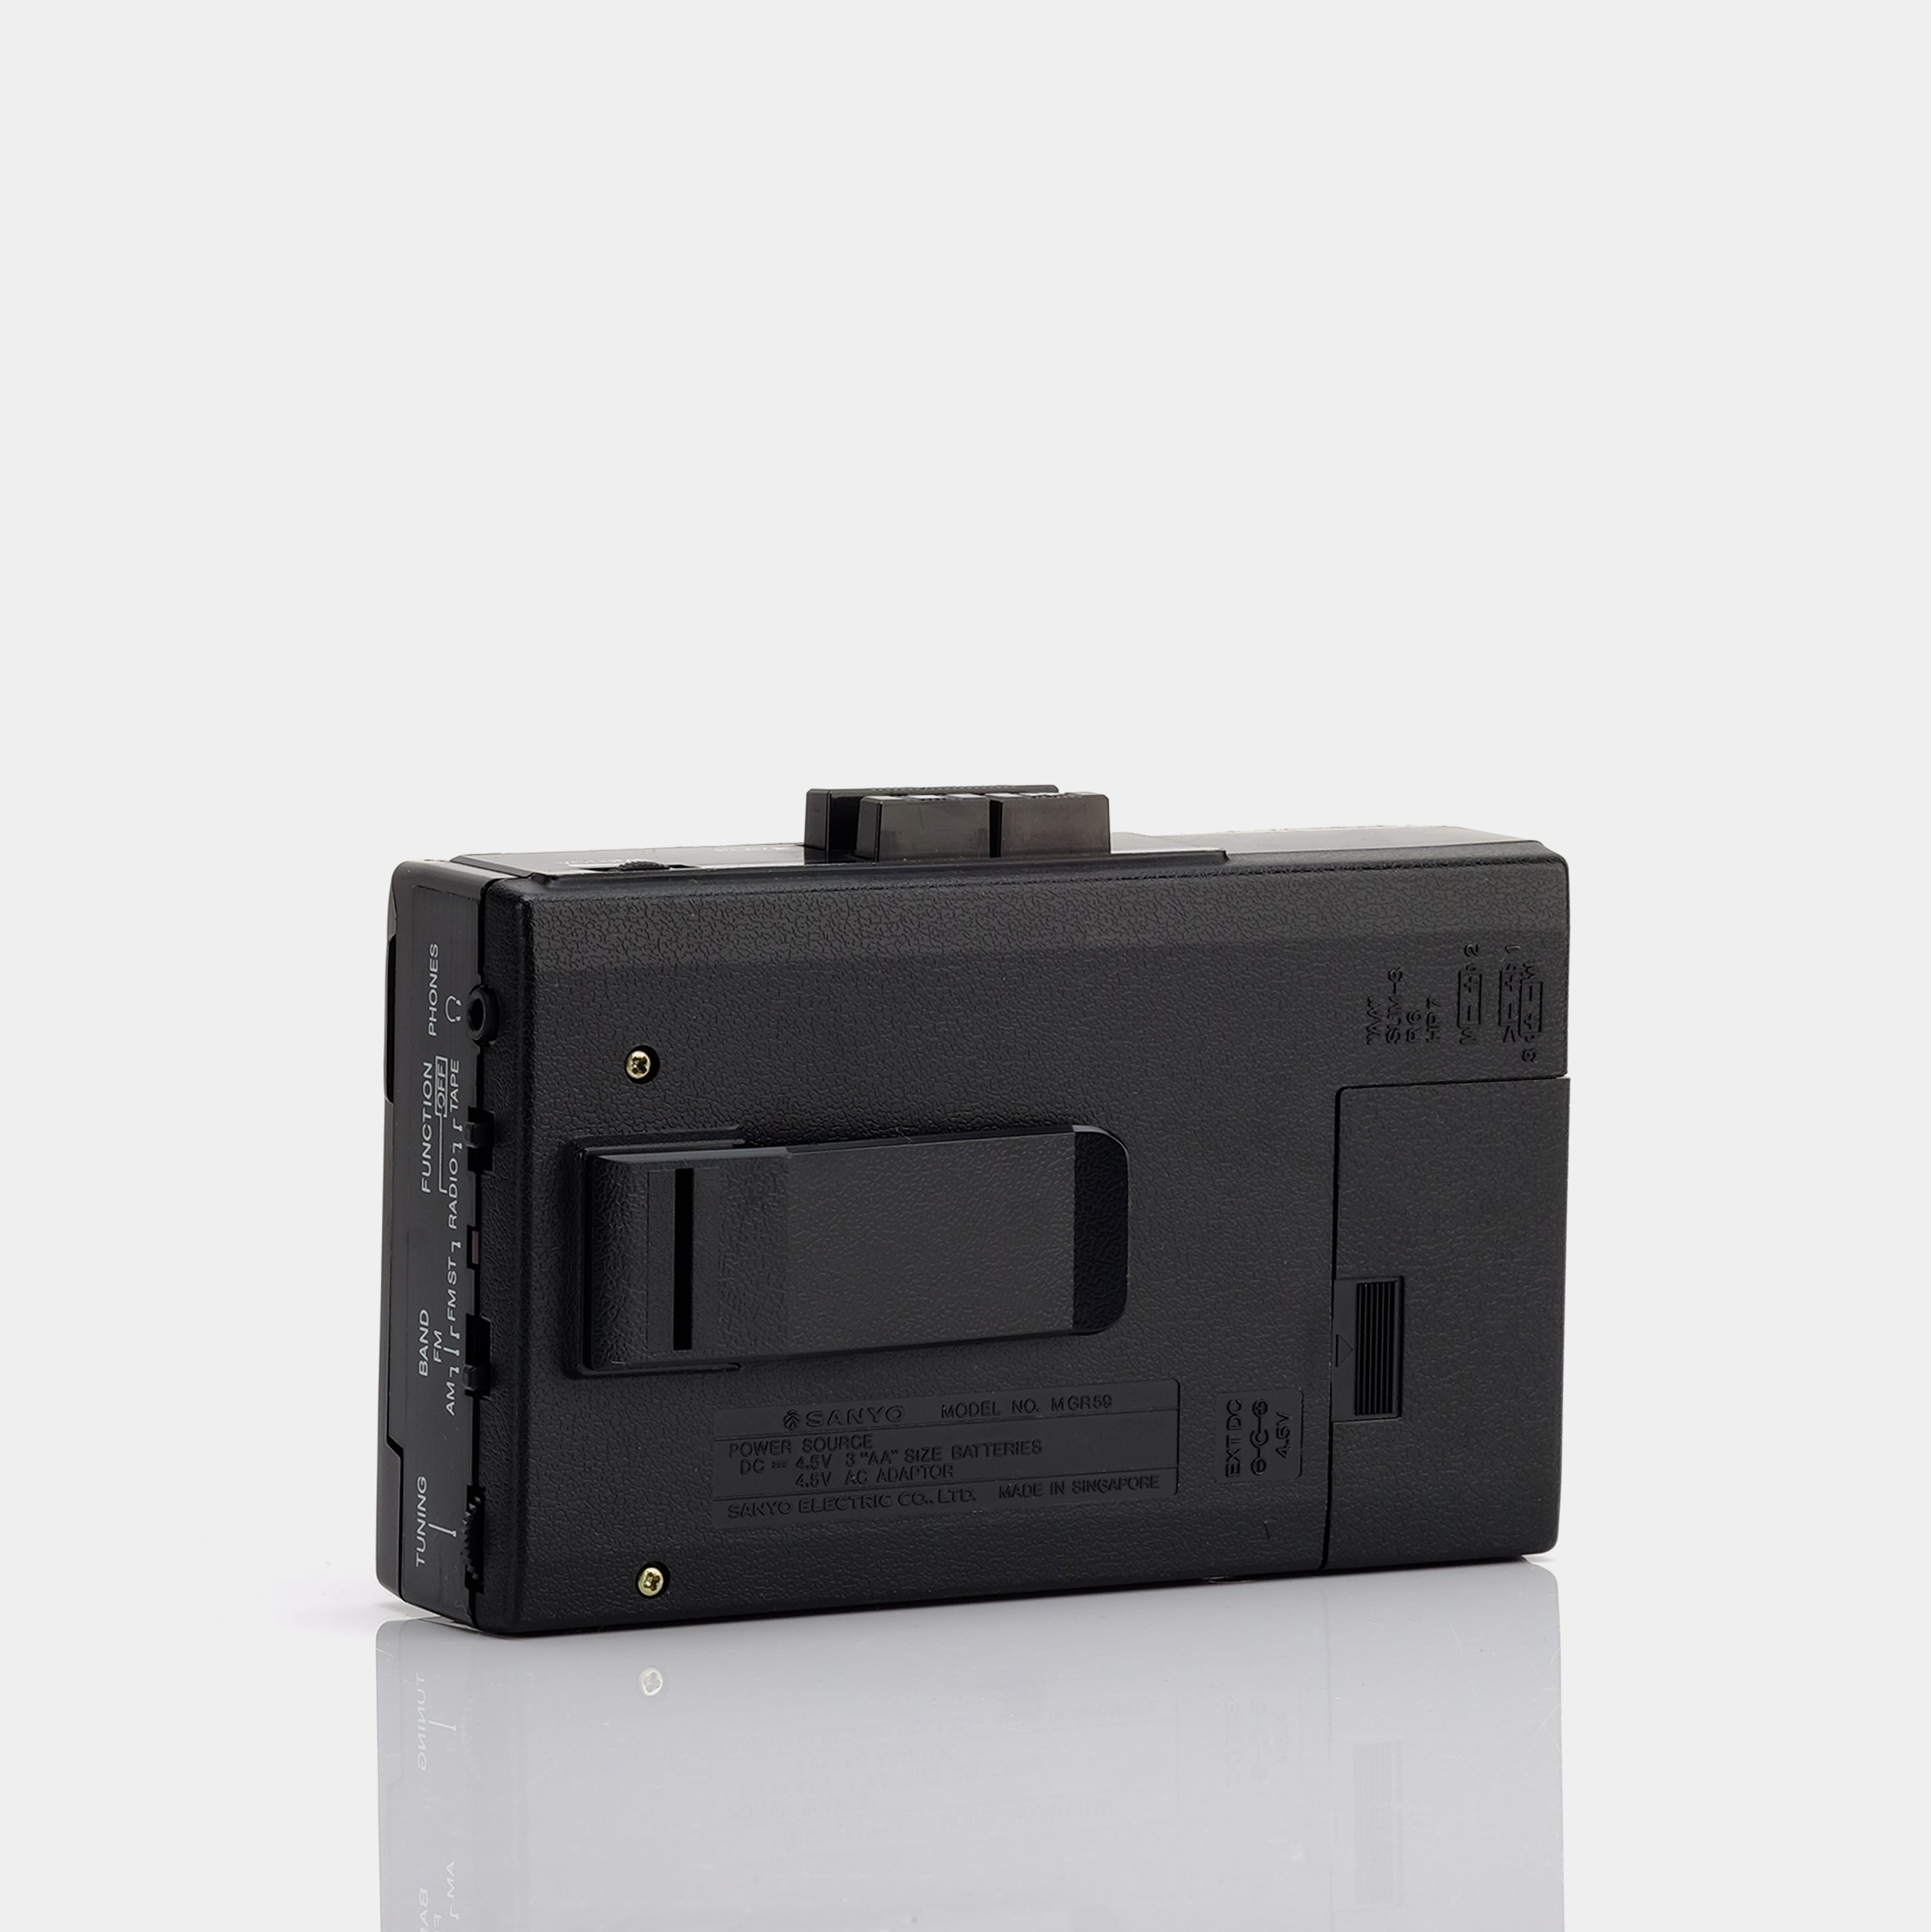 Sanyo MGR59 AM/FM Portable Cassette Player